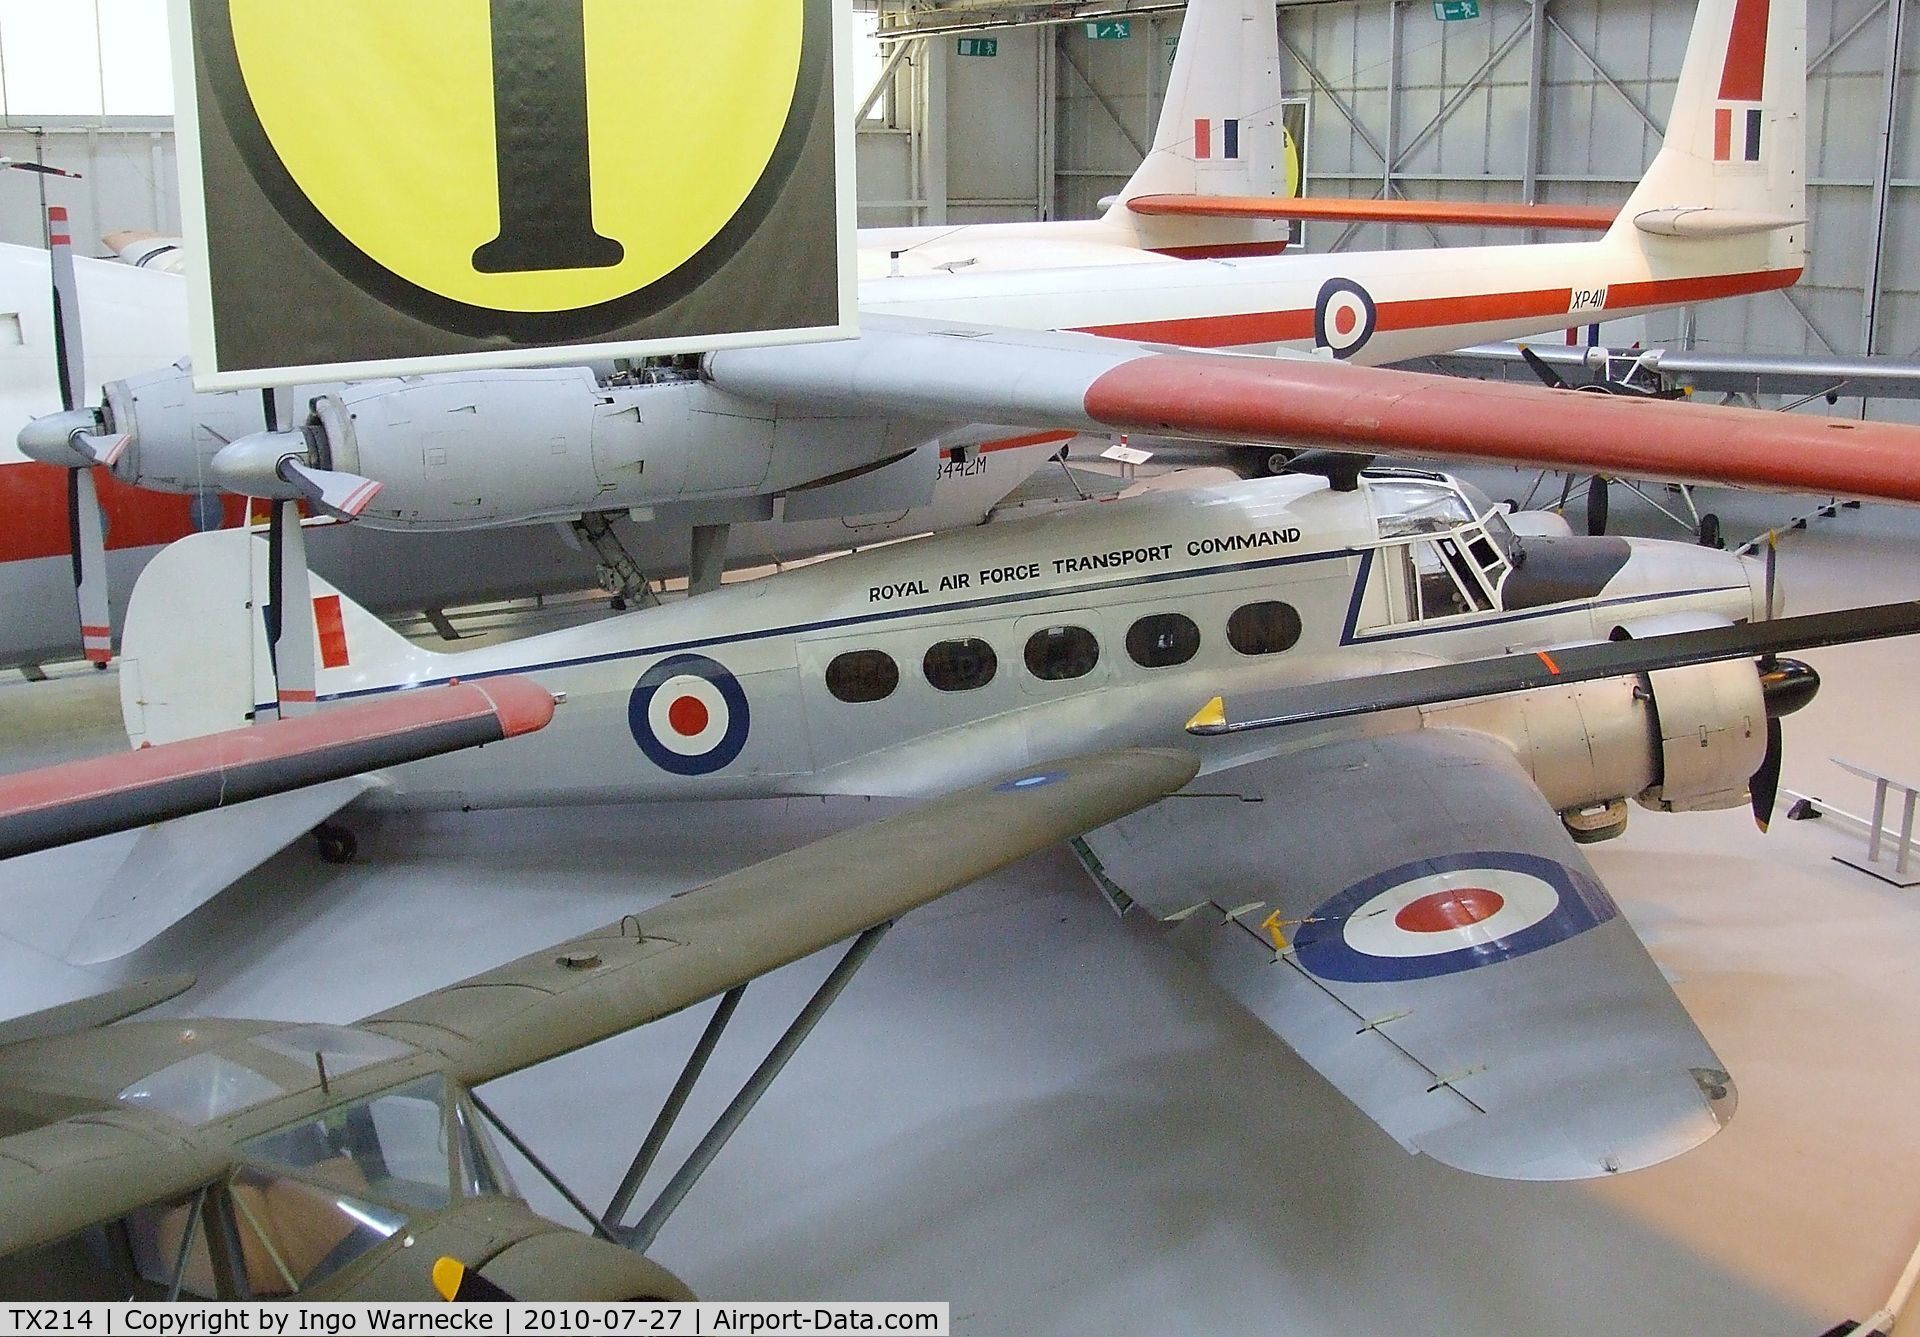 TX214, Avro 652A Anson C.19 C/N 33786, Avro Anson C19 at the RAF Museum, Cosford